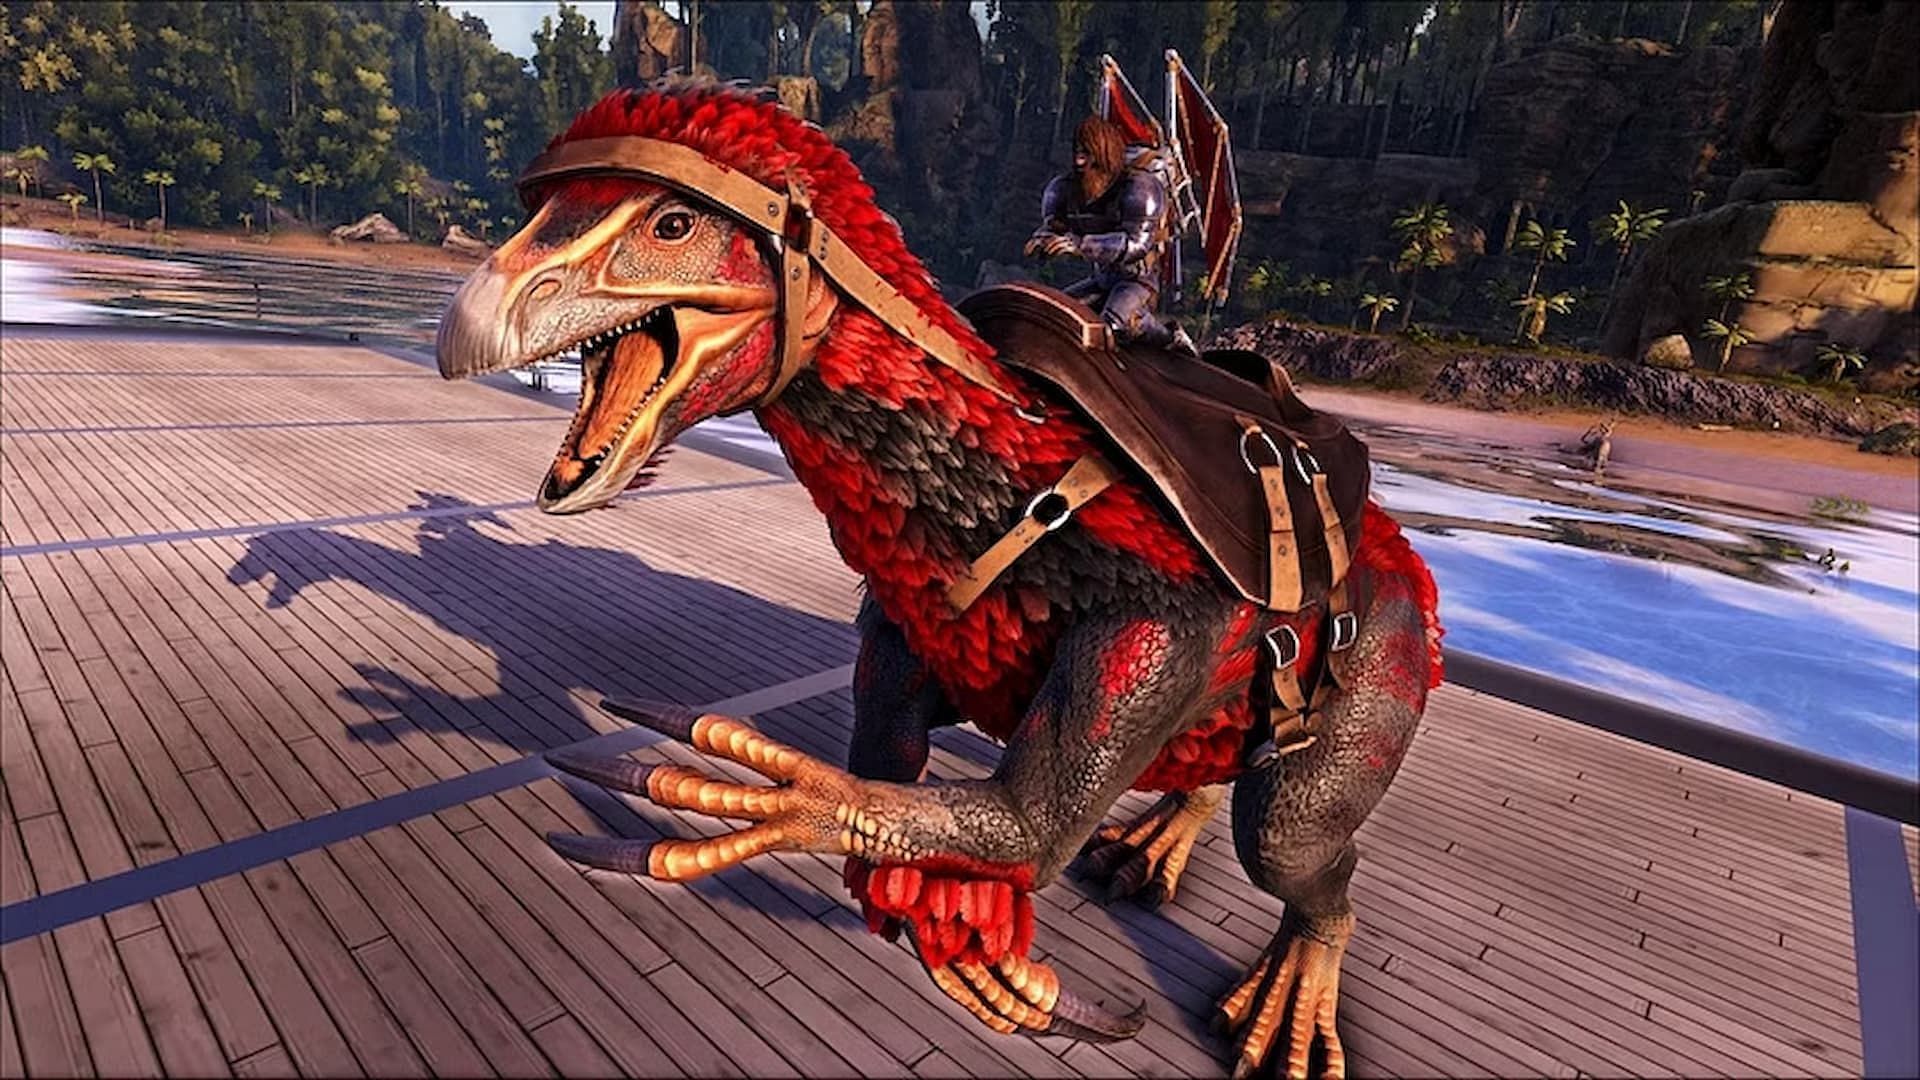 Wildcard Revealed NEW Dreadnoughtus Dossier for ARK Survival Ascended -  Deltia's Gaming